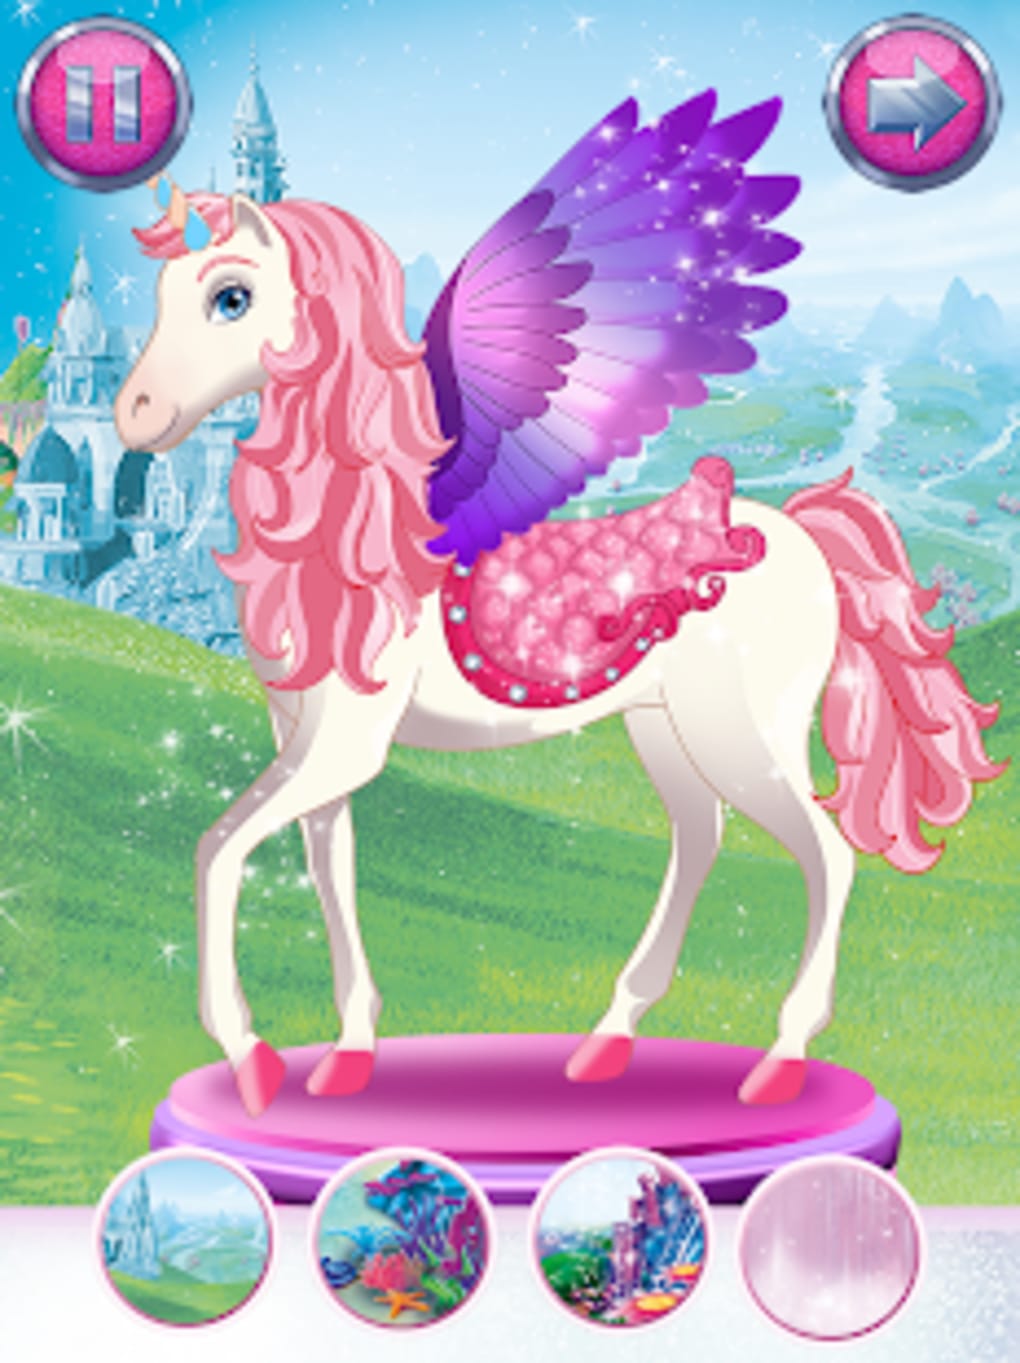 Baixar Barbie Magical Fashion 2021.2 Android - Download APK Grátis